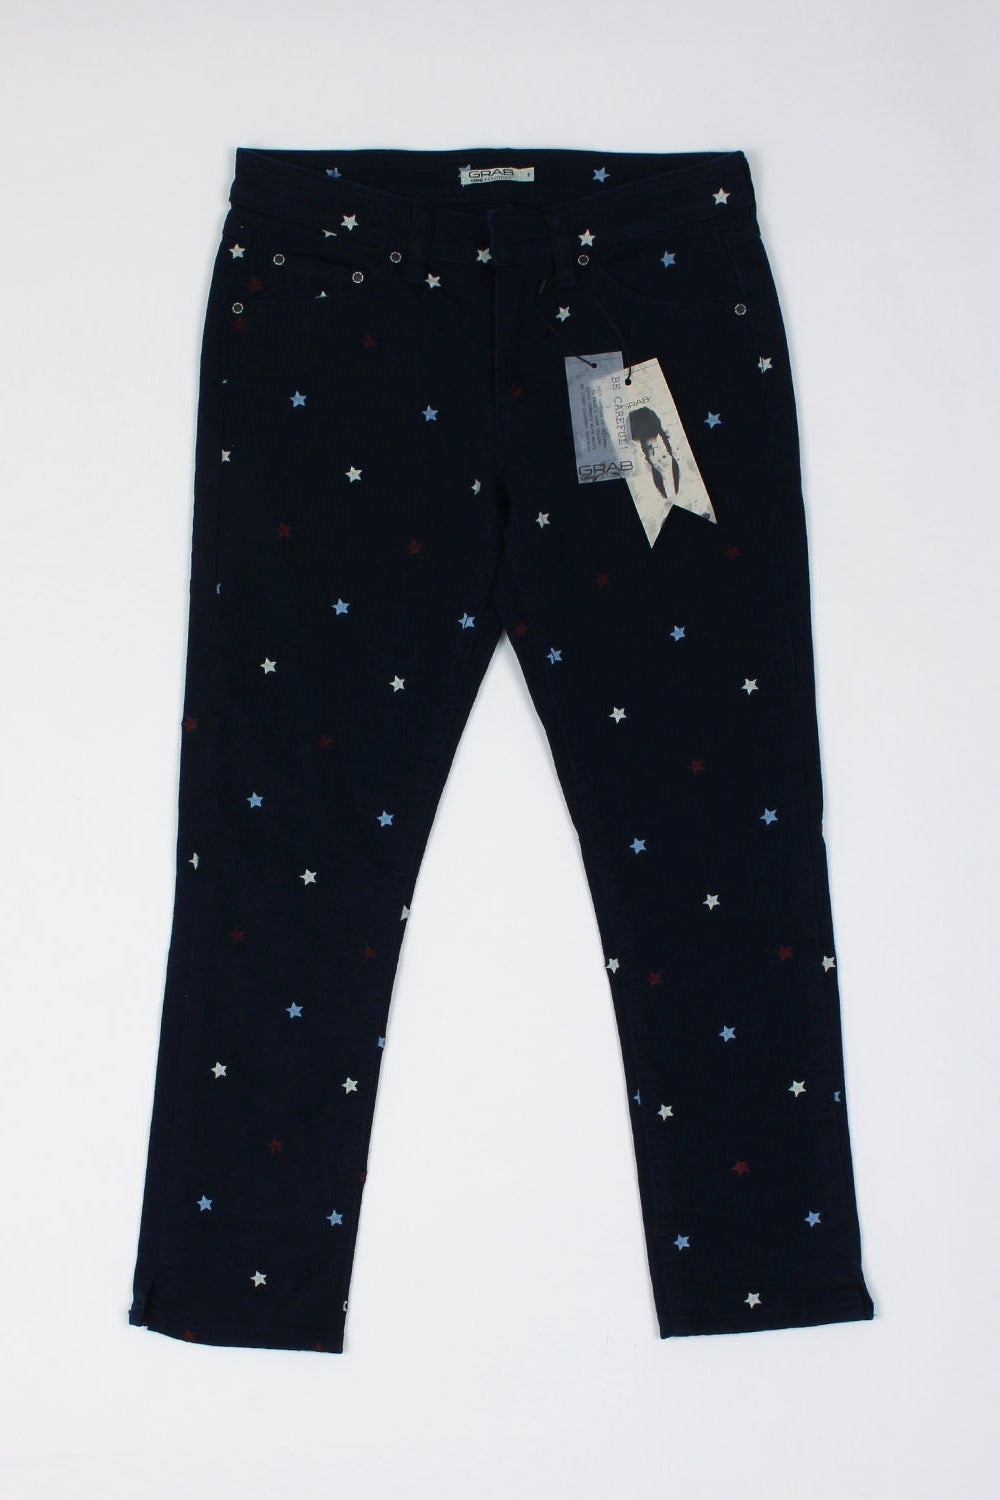 Grab Navy Star Print Skinny Jeans 8